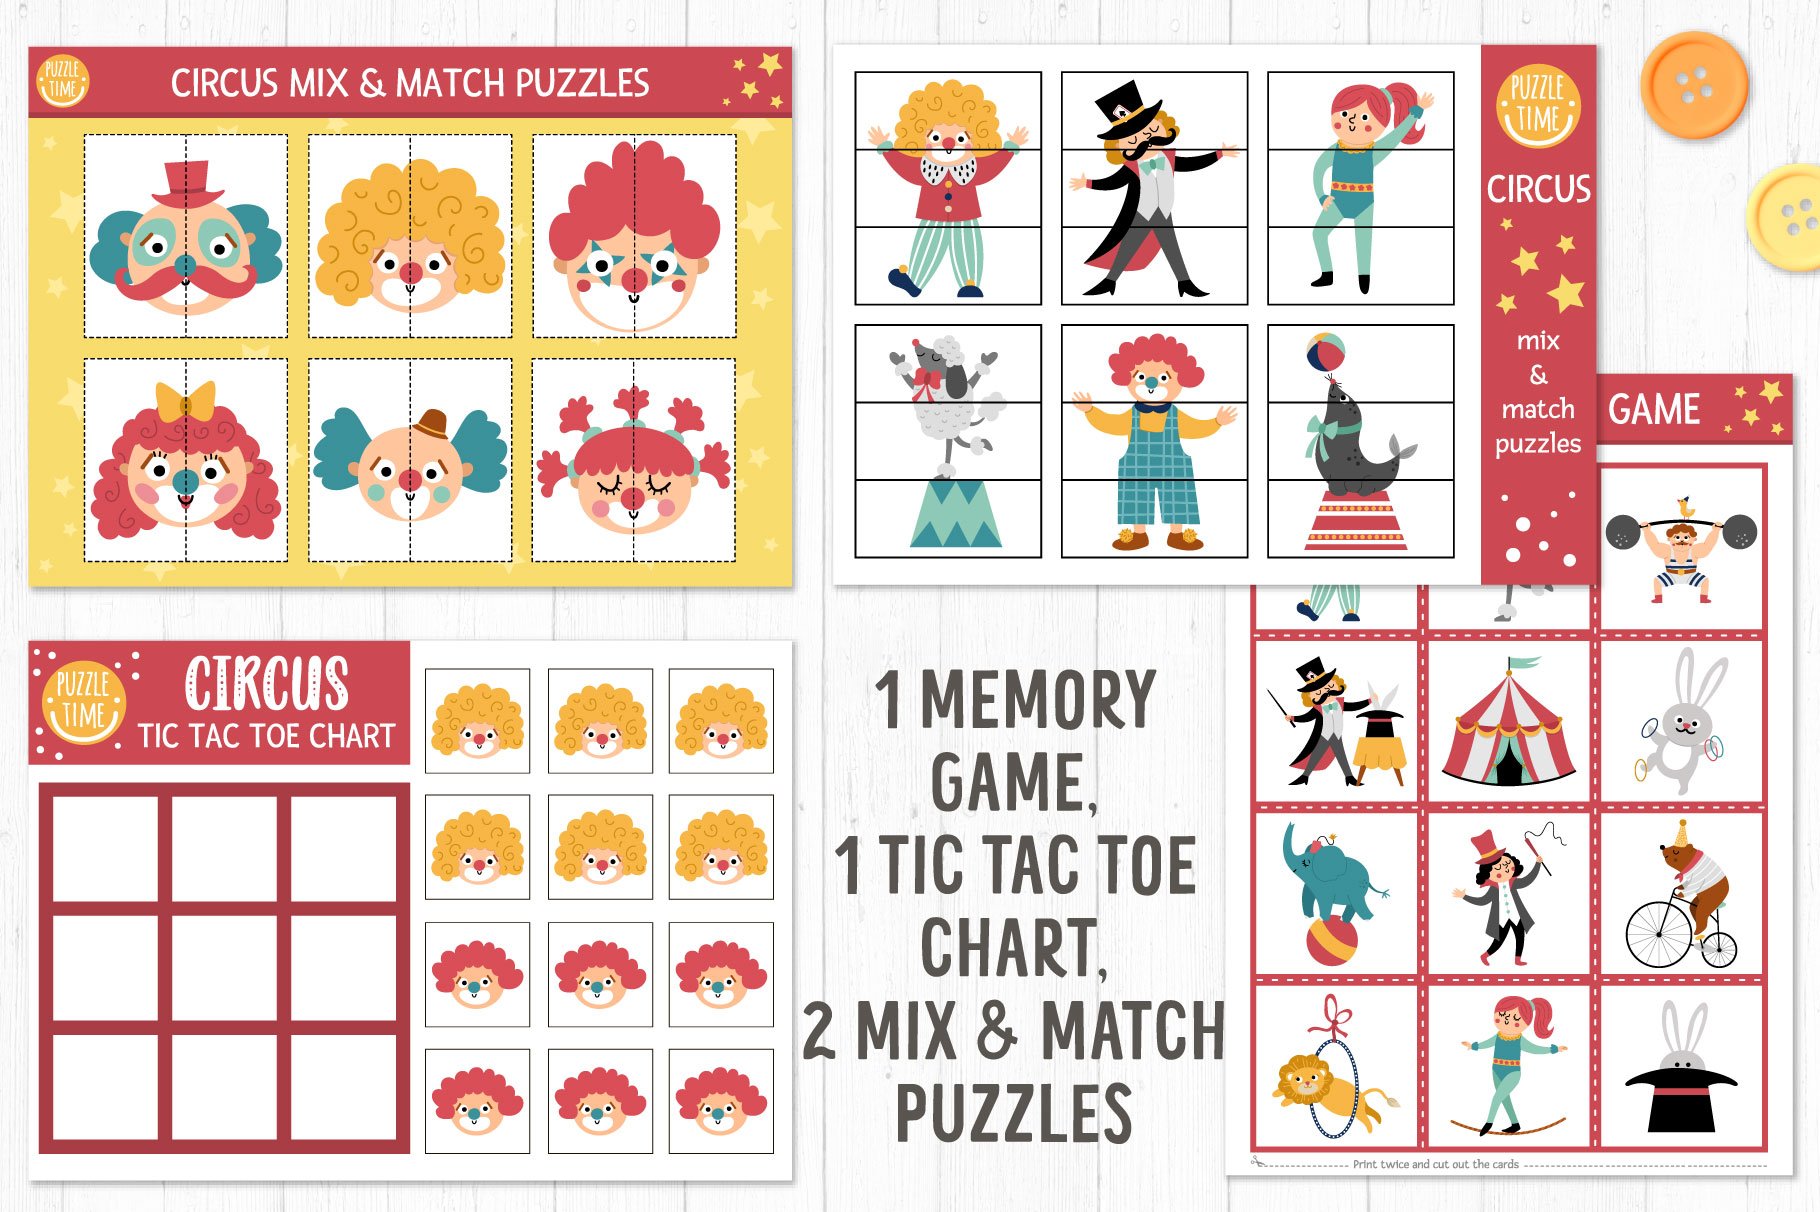 Memory game, tic tac toe chart, mix & match puzzles.